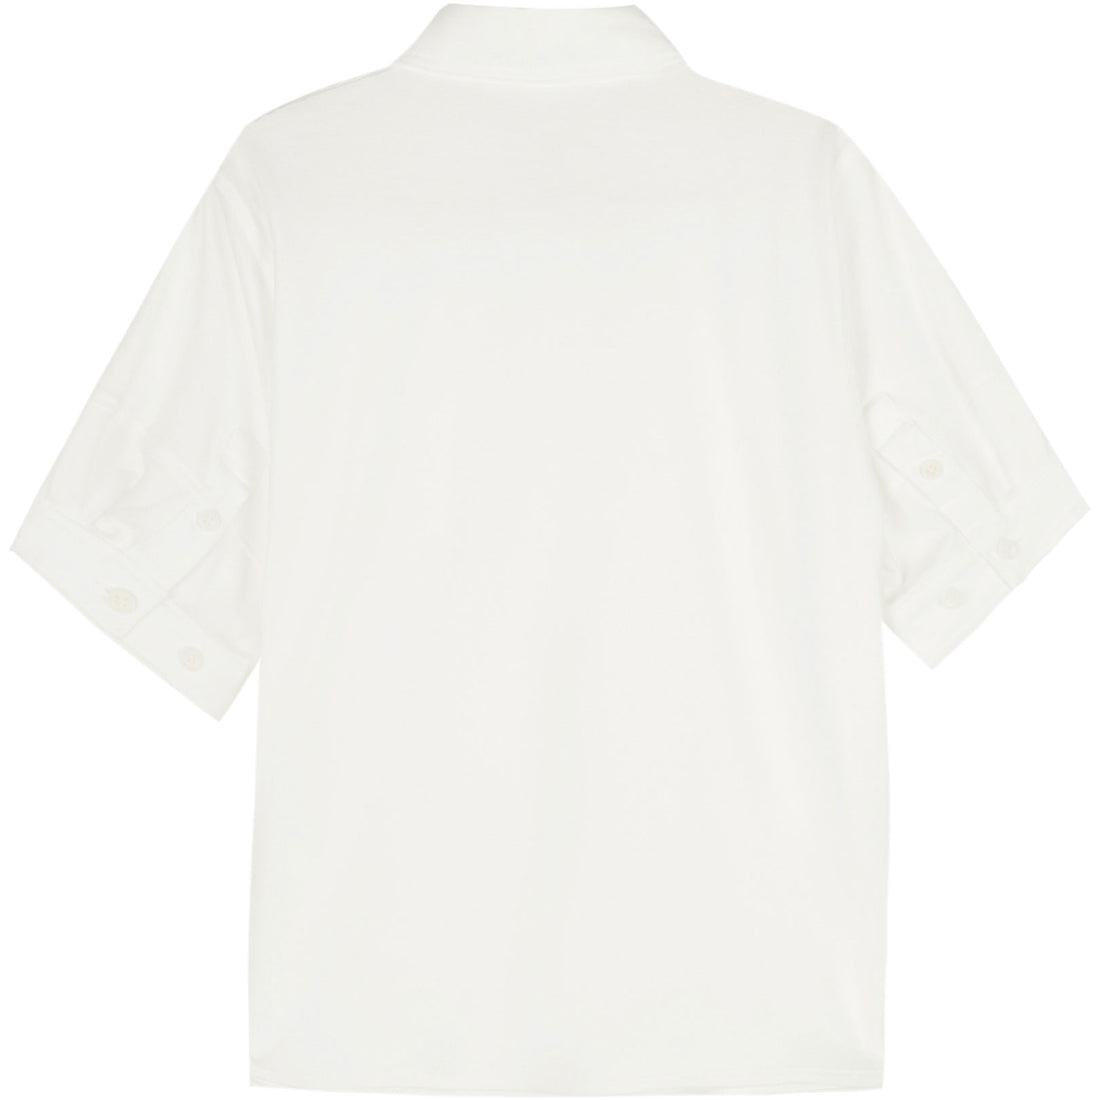 JNBY White Short Sleeve Polo